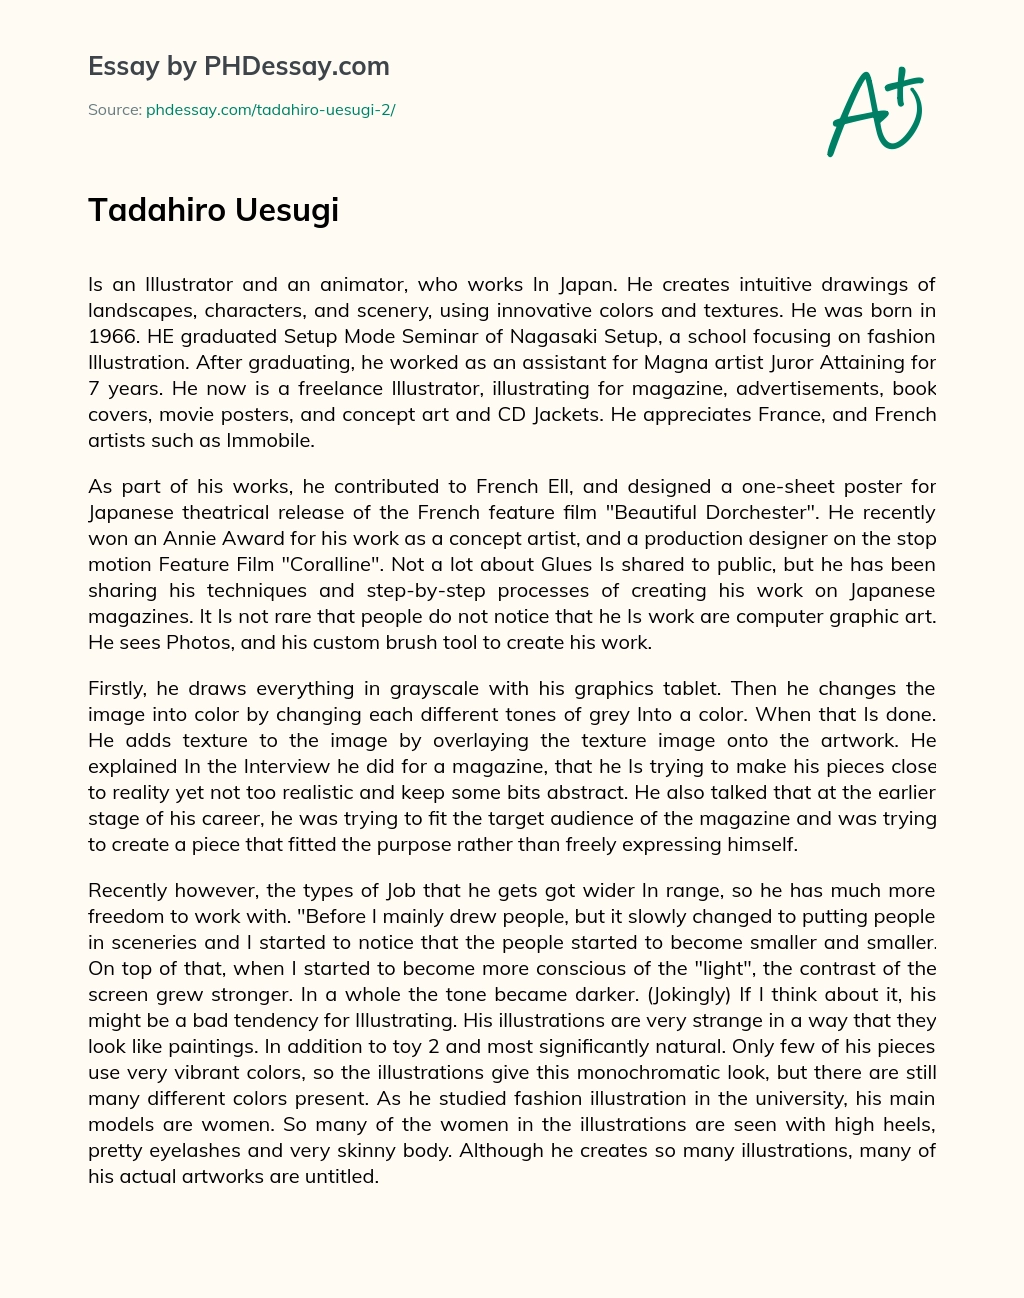 Tadahiro Uesugi essay